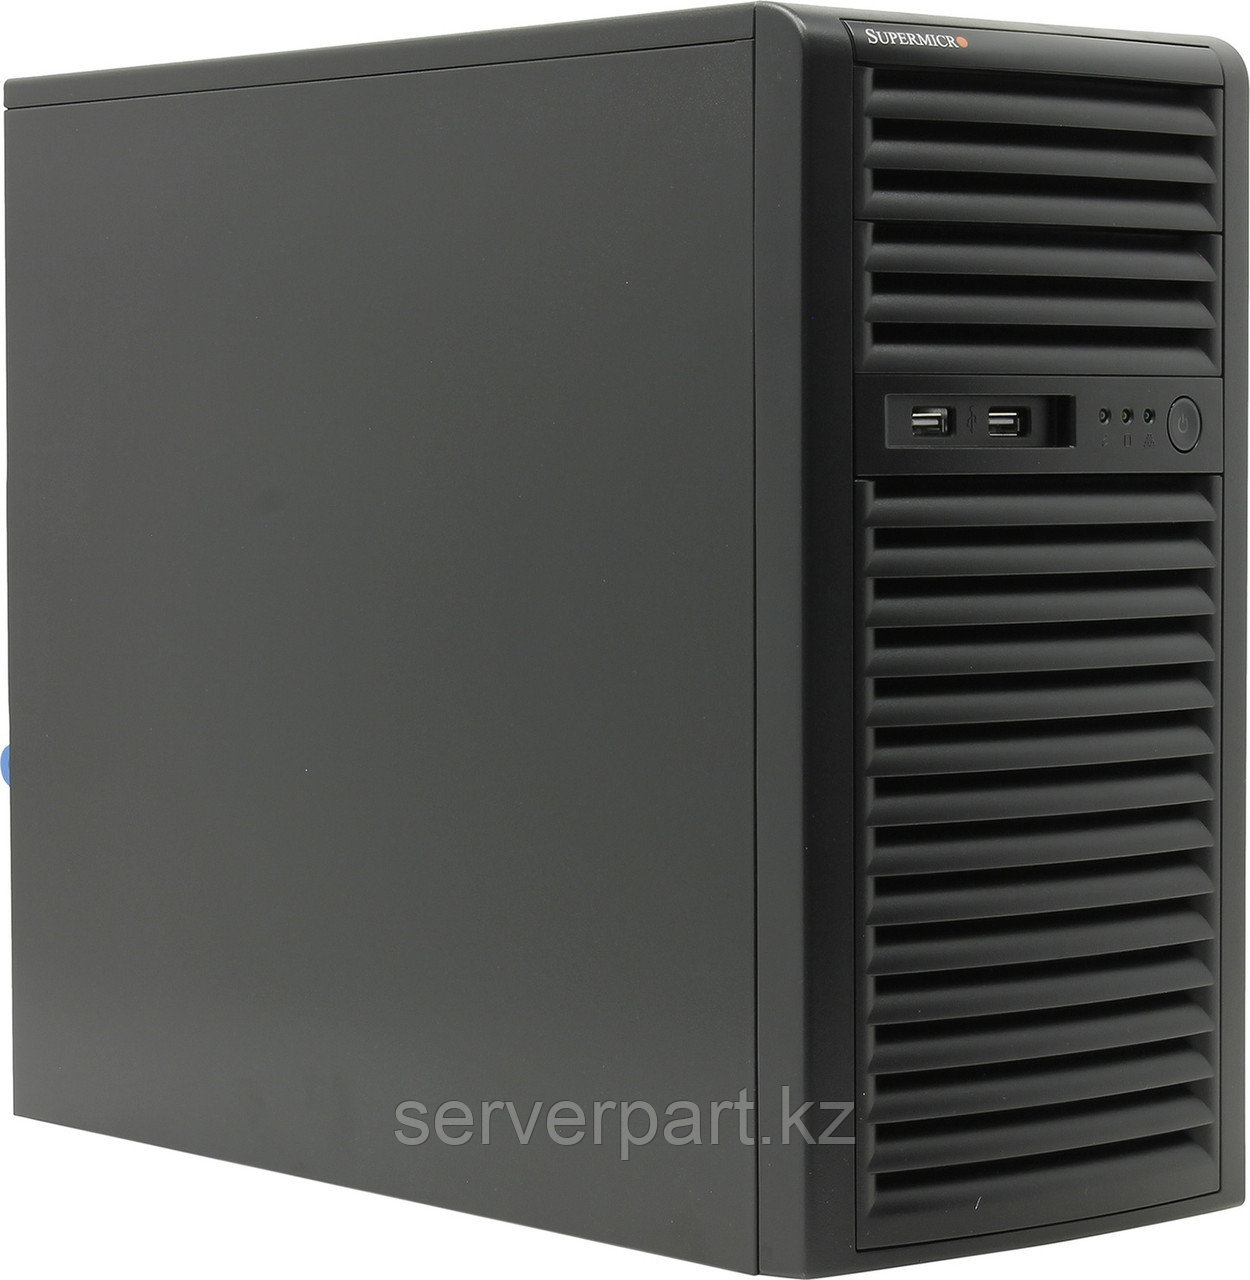 Сервер Supermicro SYS-5039D Tower 4LFF/4-core intel Xeon E3-1220v6 3GHz/24GB EUDIMM/2x240GB SSD RI Hyb, фото 1